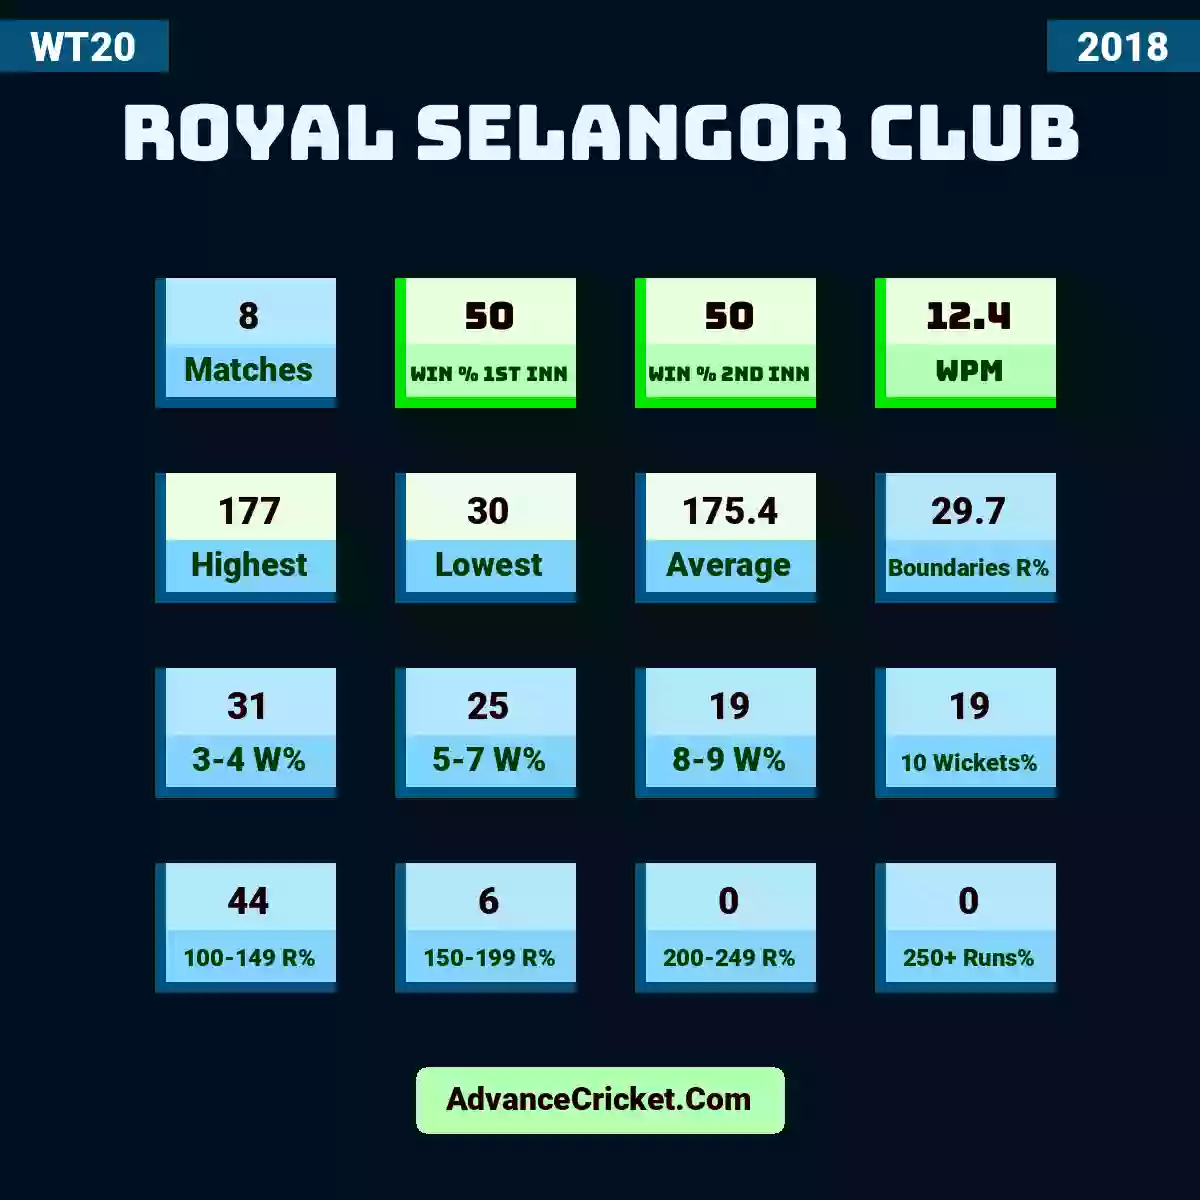 Image showing Royal Selangor Club with Matches: 8, Win % 1st Inn: 50, Win % 2nd Inn: 50, WPM: 12.4, Highest: 177, Lowest: 30, Average: 175.4, Boundaries R%: 29.7, 3-4 W%: 31, 5-7 W%: 25, 8-9 W%: 19, 10 Wickets%: 19, 100-149 R%: 44, 150-199 R%: 6, 200-249 R%: 0, 250+ Runs%: 0.